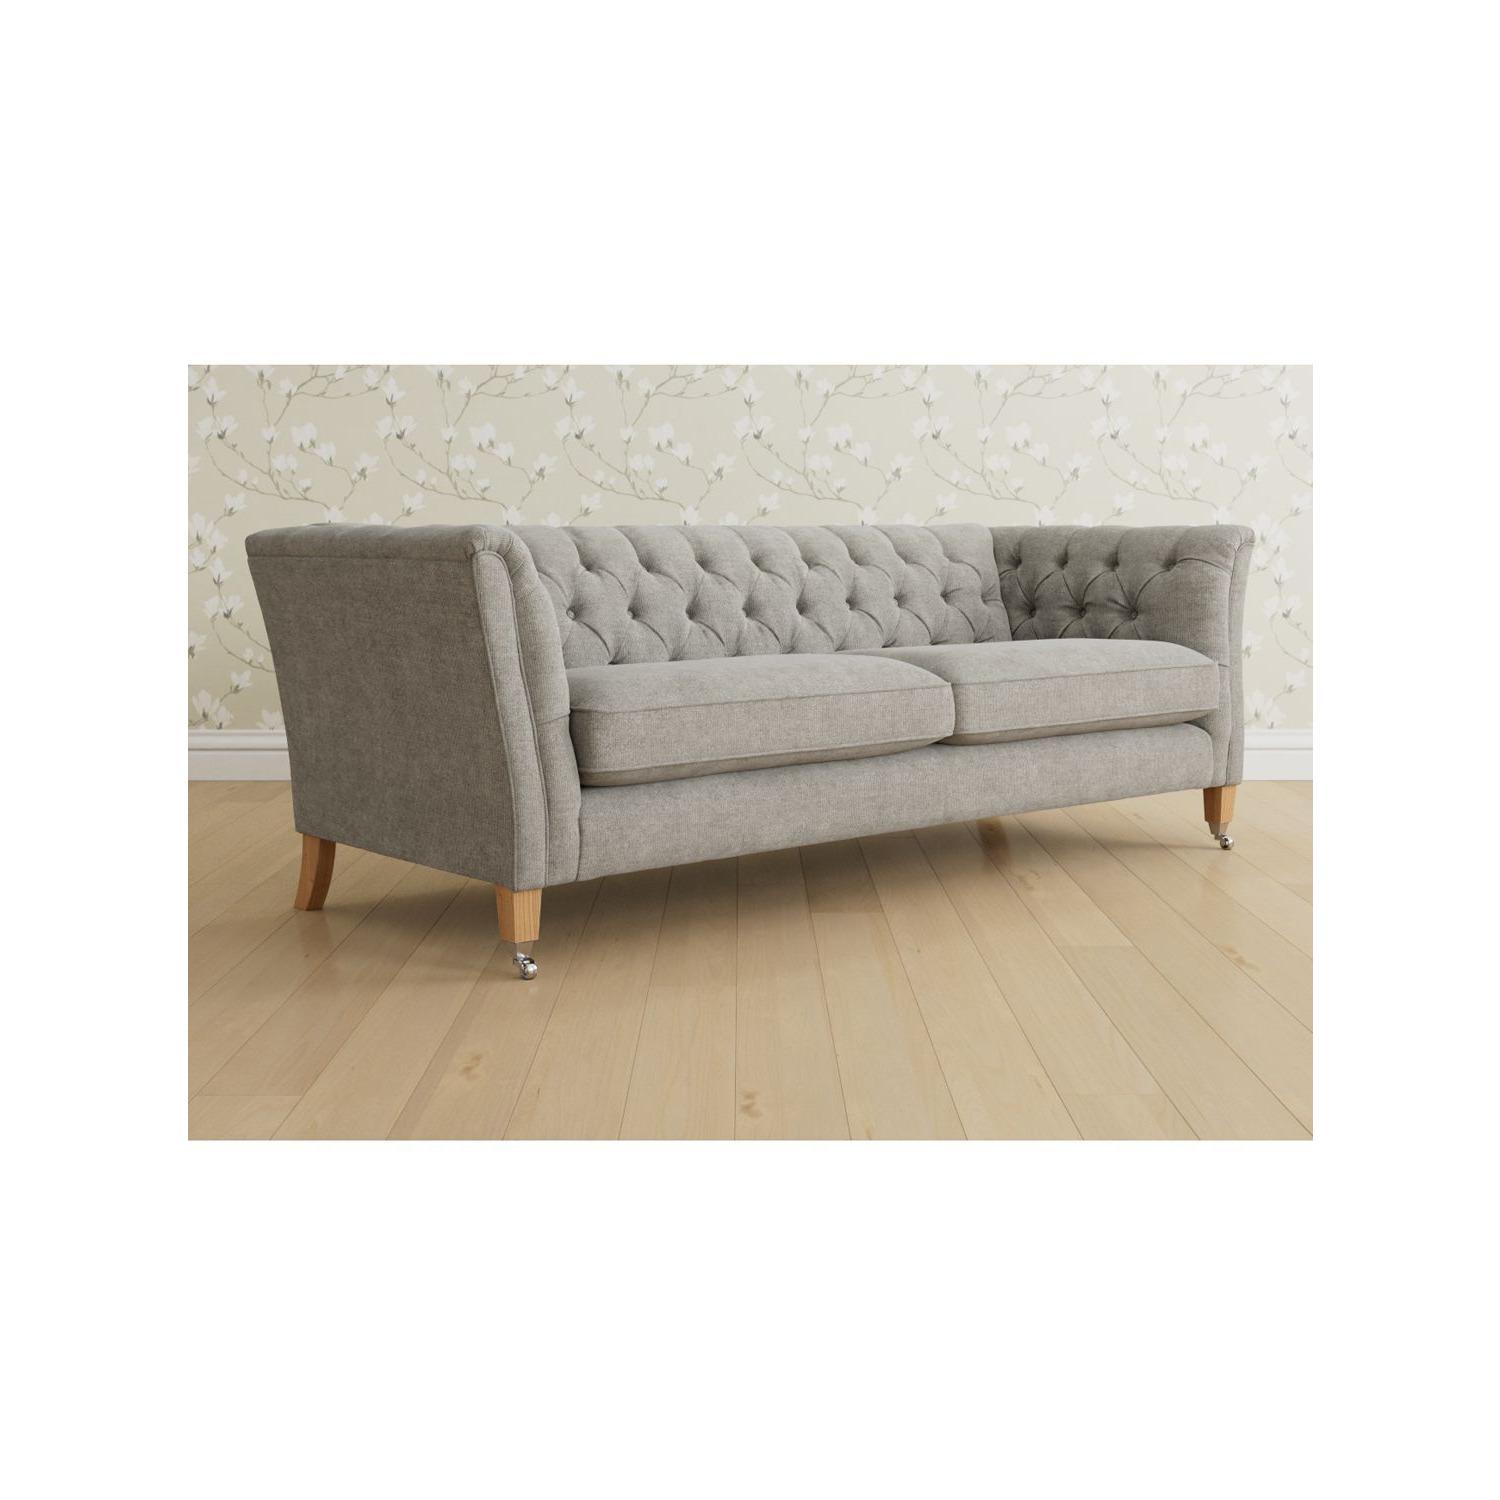 Laura Ashley Chatsworth Grand 4 Seater Sofa, Oak Leg - image 1